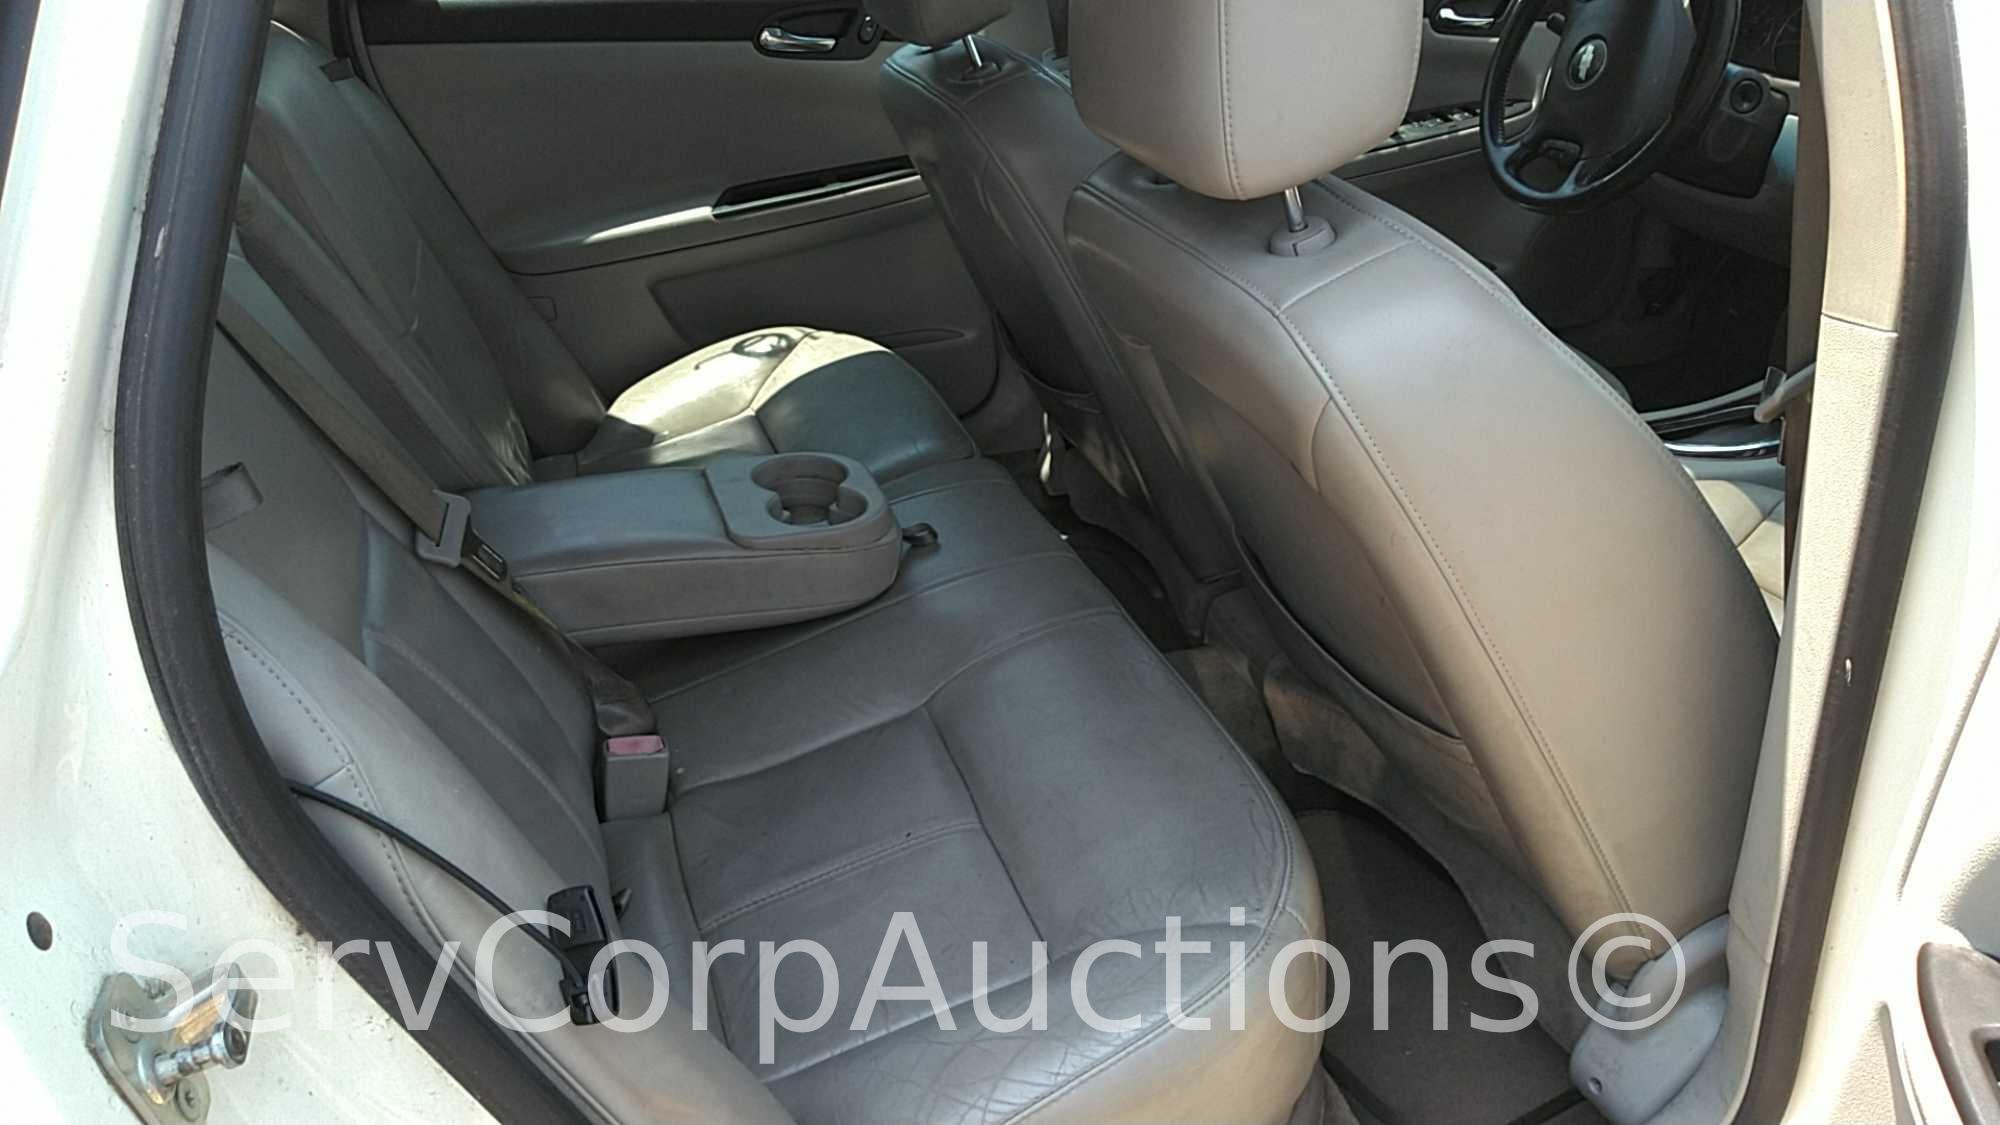 2007 Chevrolet Impala Passenger Car, VIN # 2G1WC58R979137853 Reconstructed